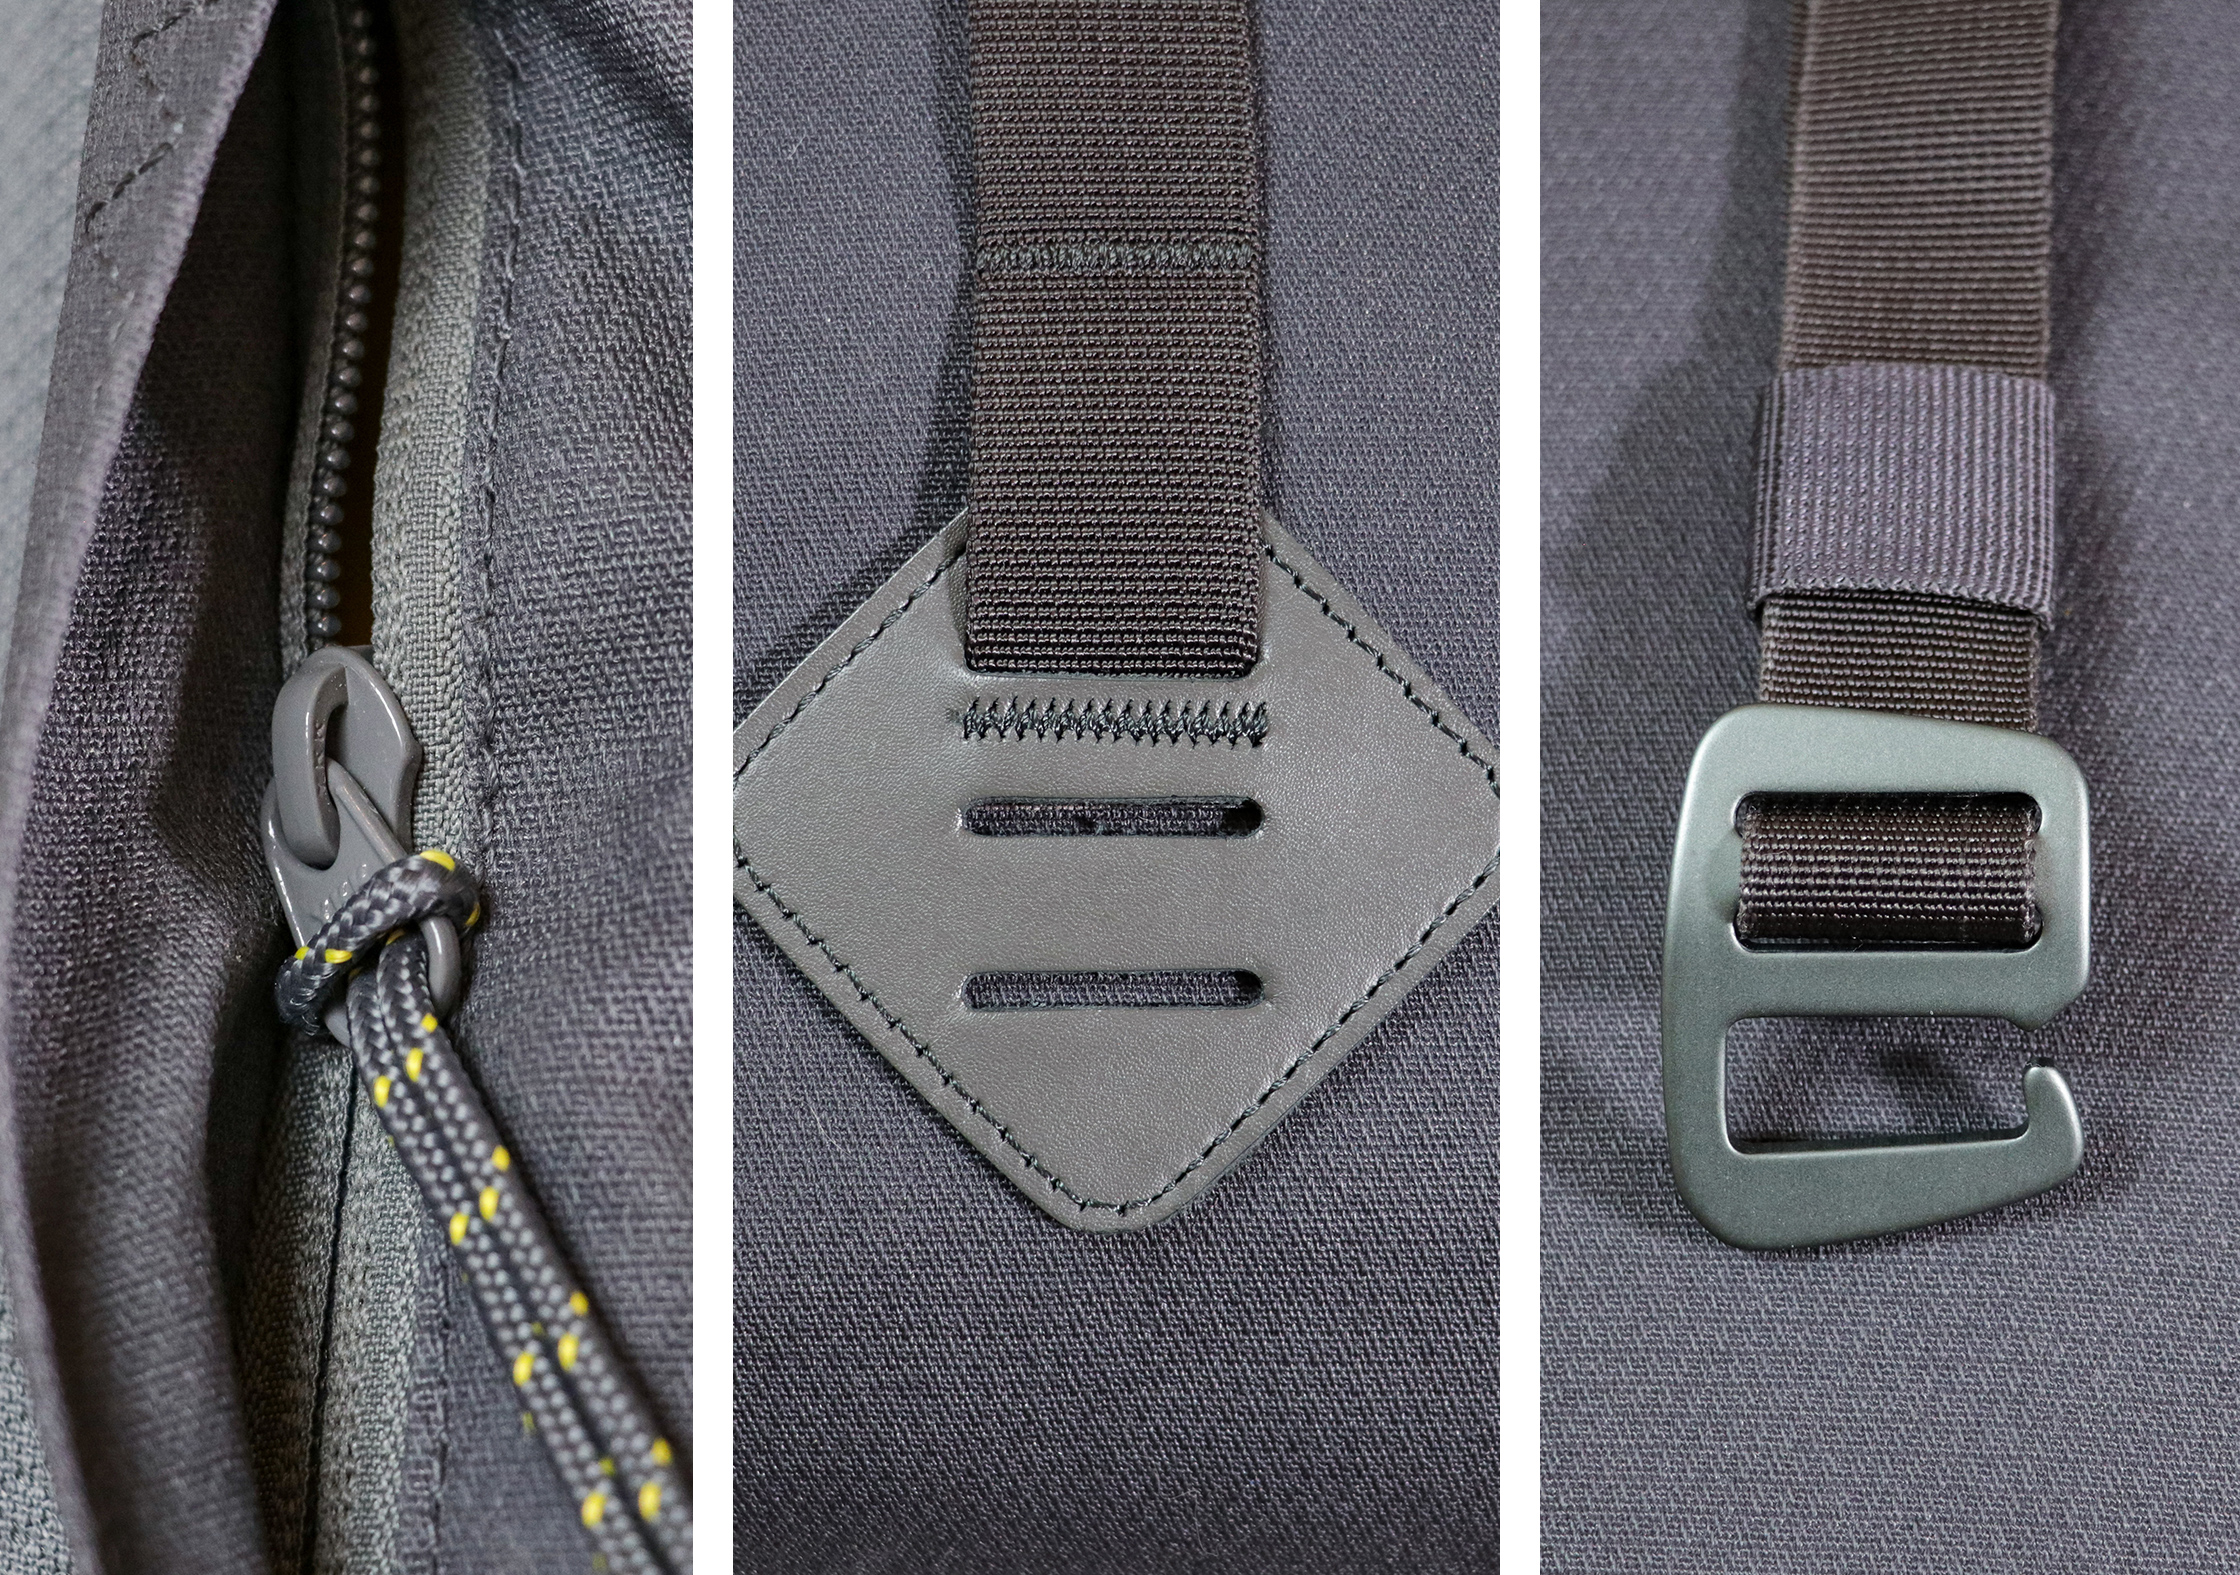 Millican Fraser Rucksack 32L YKK Zippers, Leather Accents & Aluminum Buckles